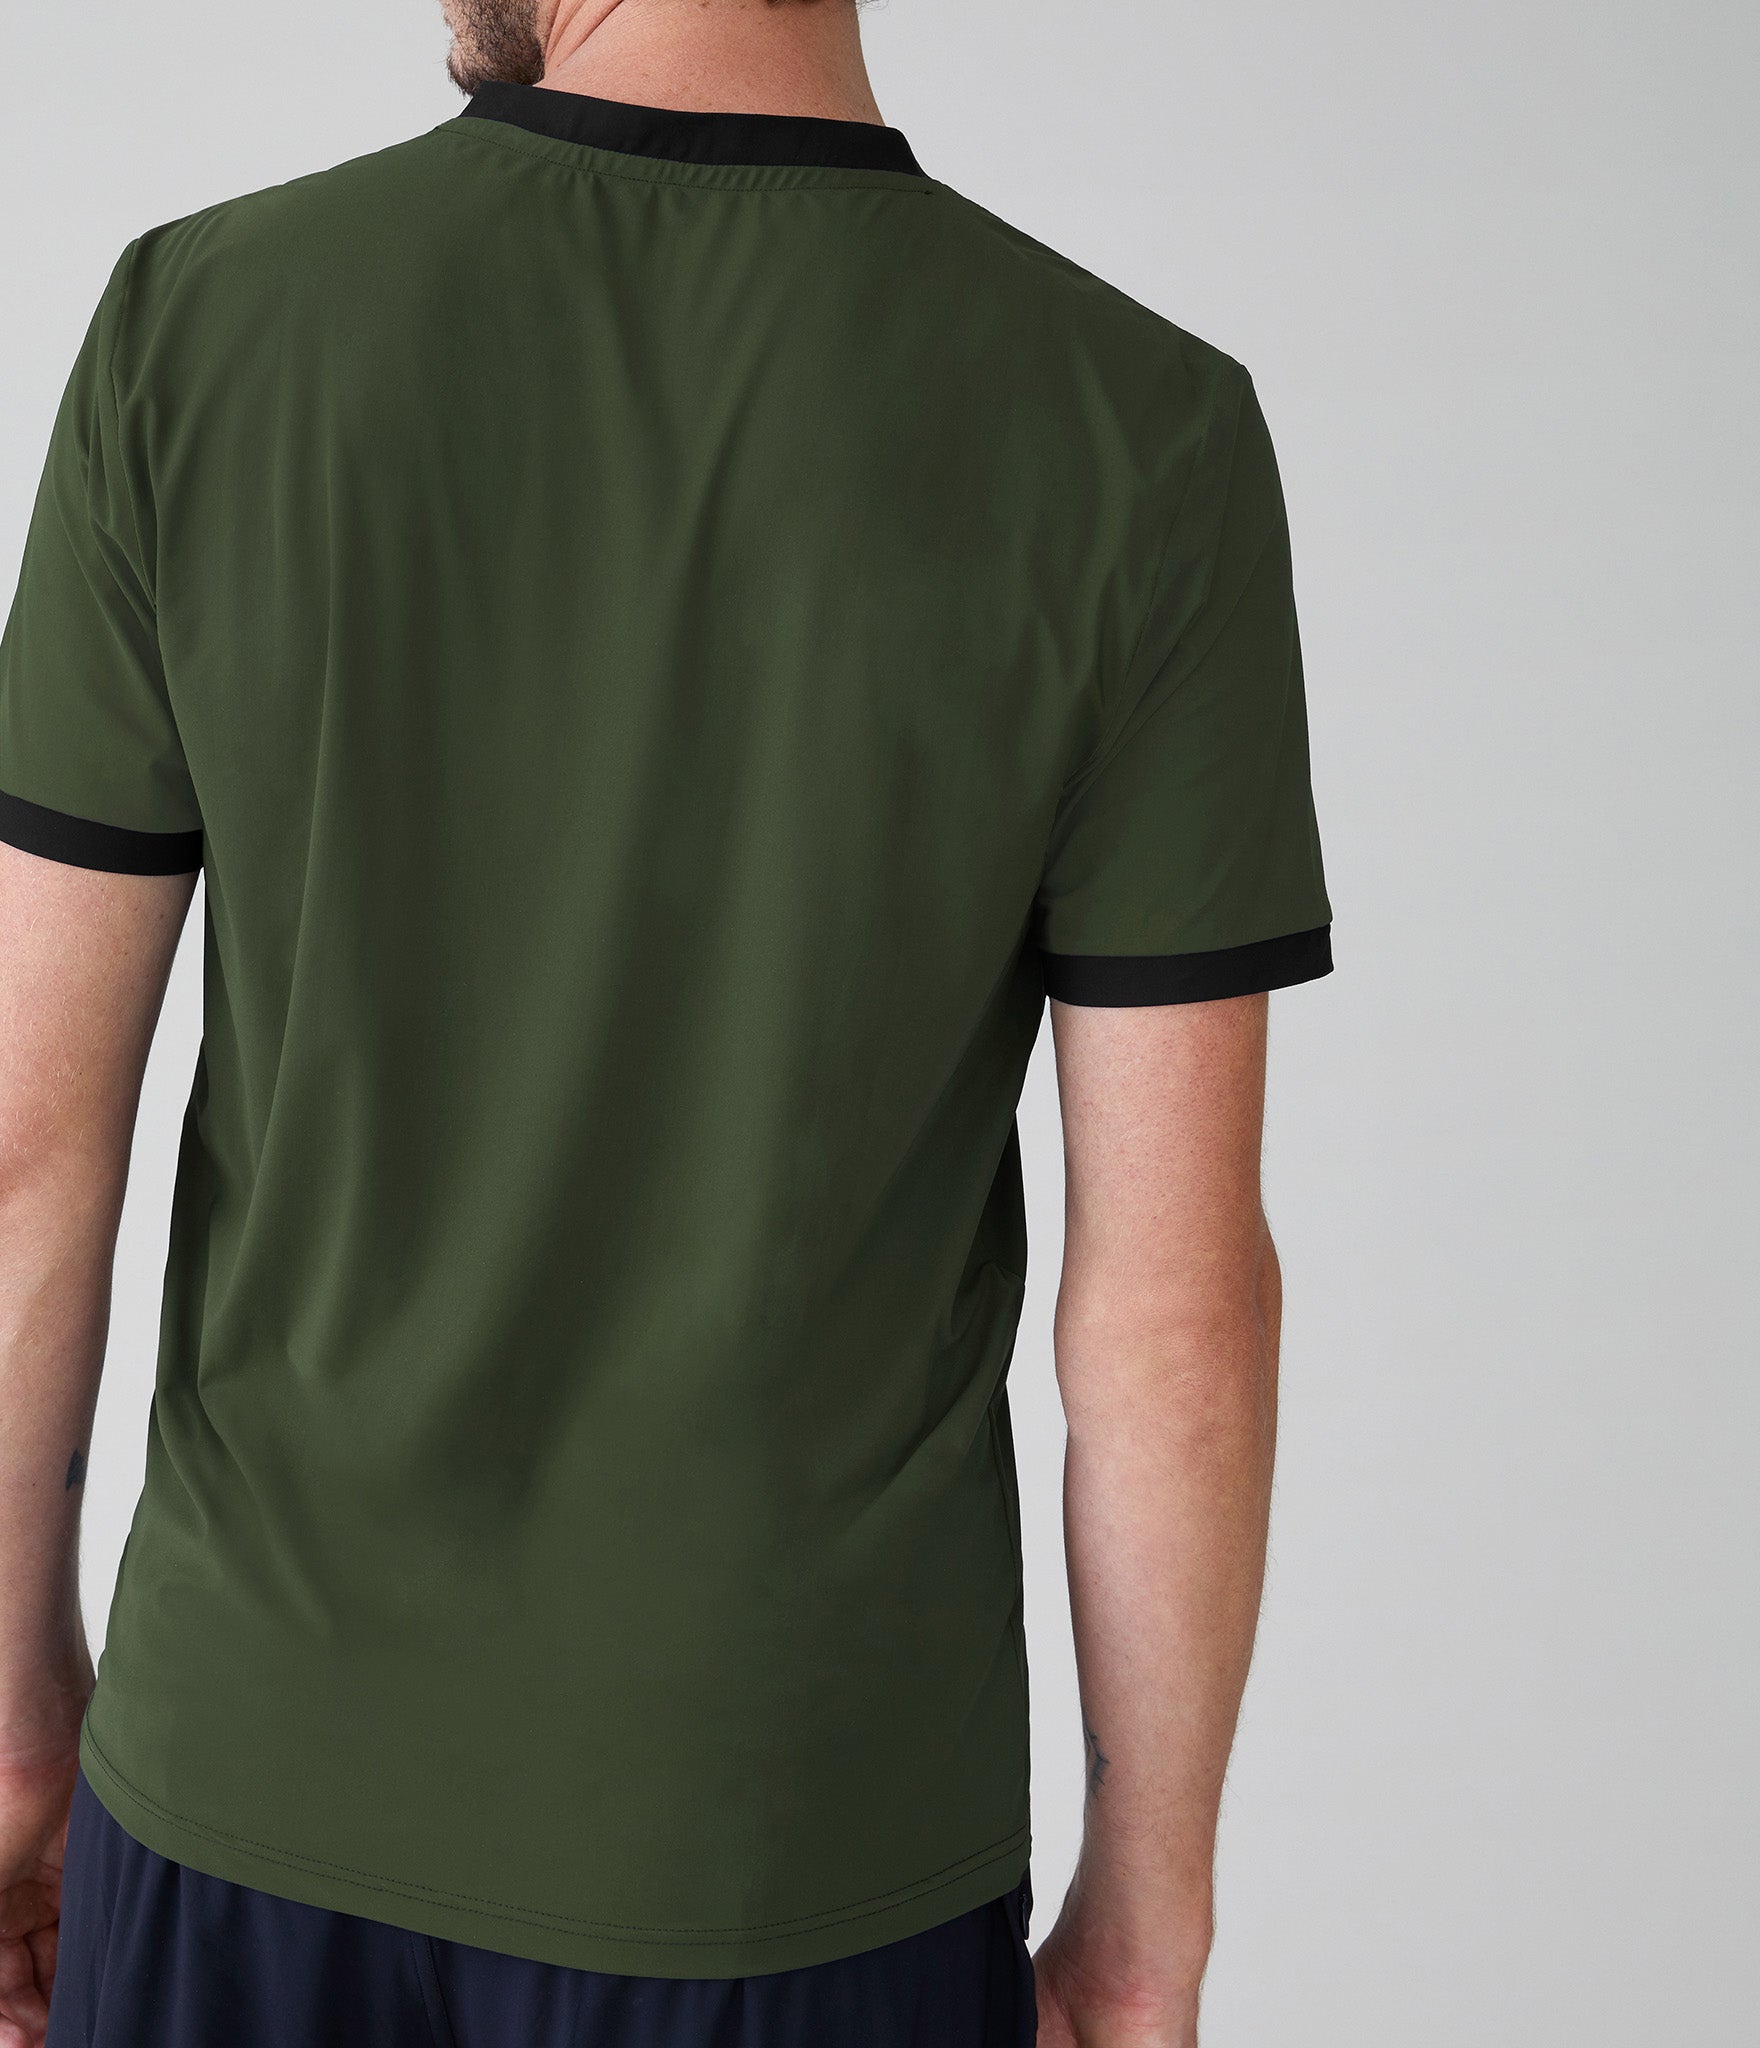 Monaco t-shirt - Khaki green – Tryst Stockholm